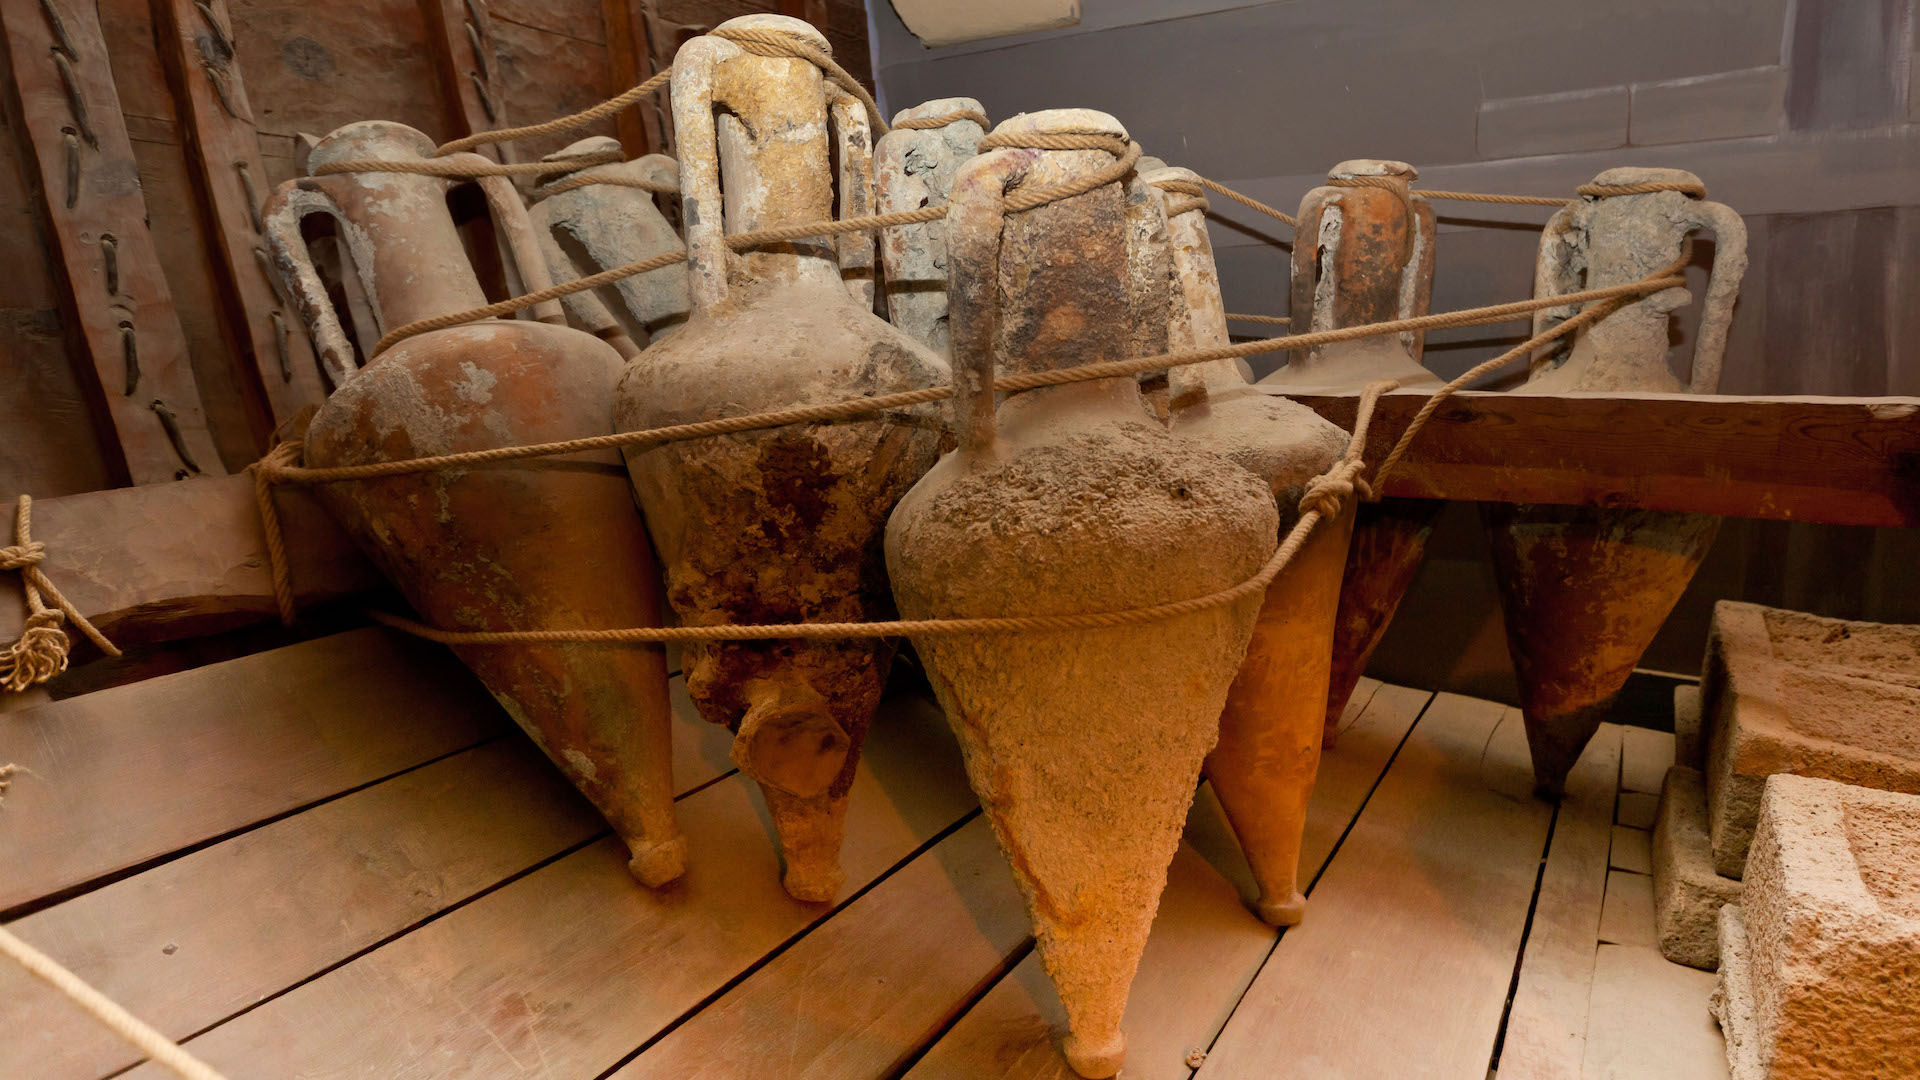 Pottery tied up with ropes inside the Kyrenia ship